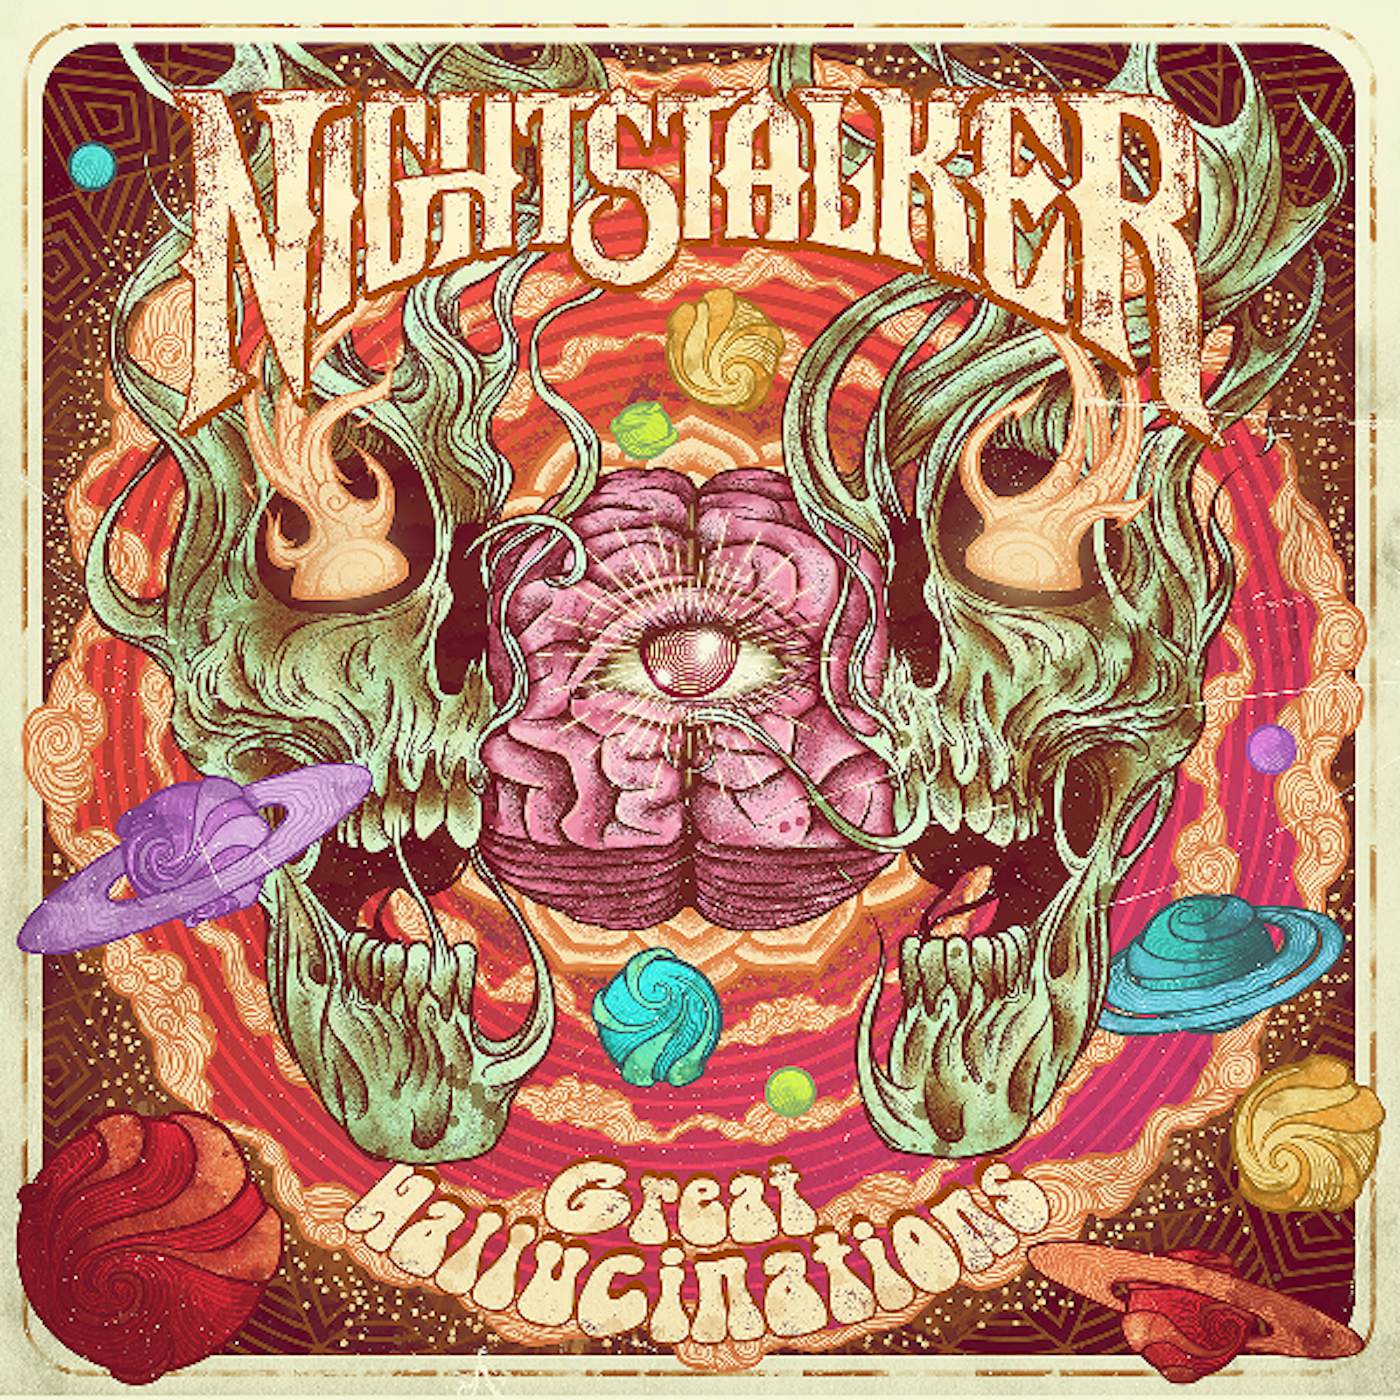 Nightstalker Great Hallucinations Vinyl Record